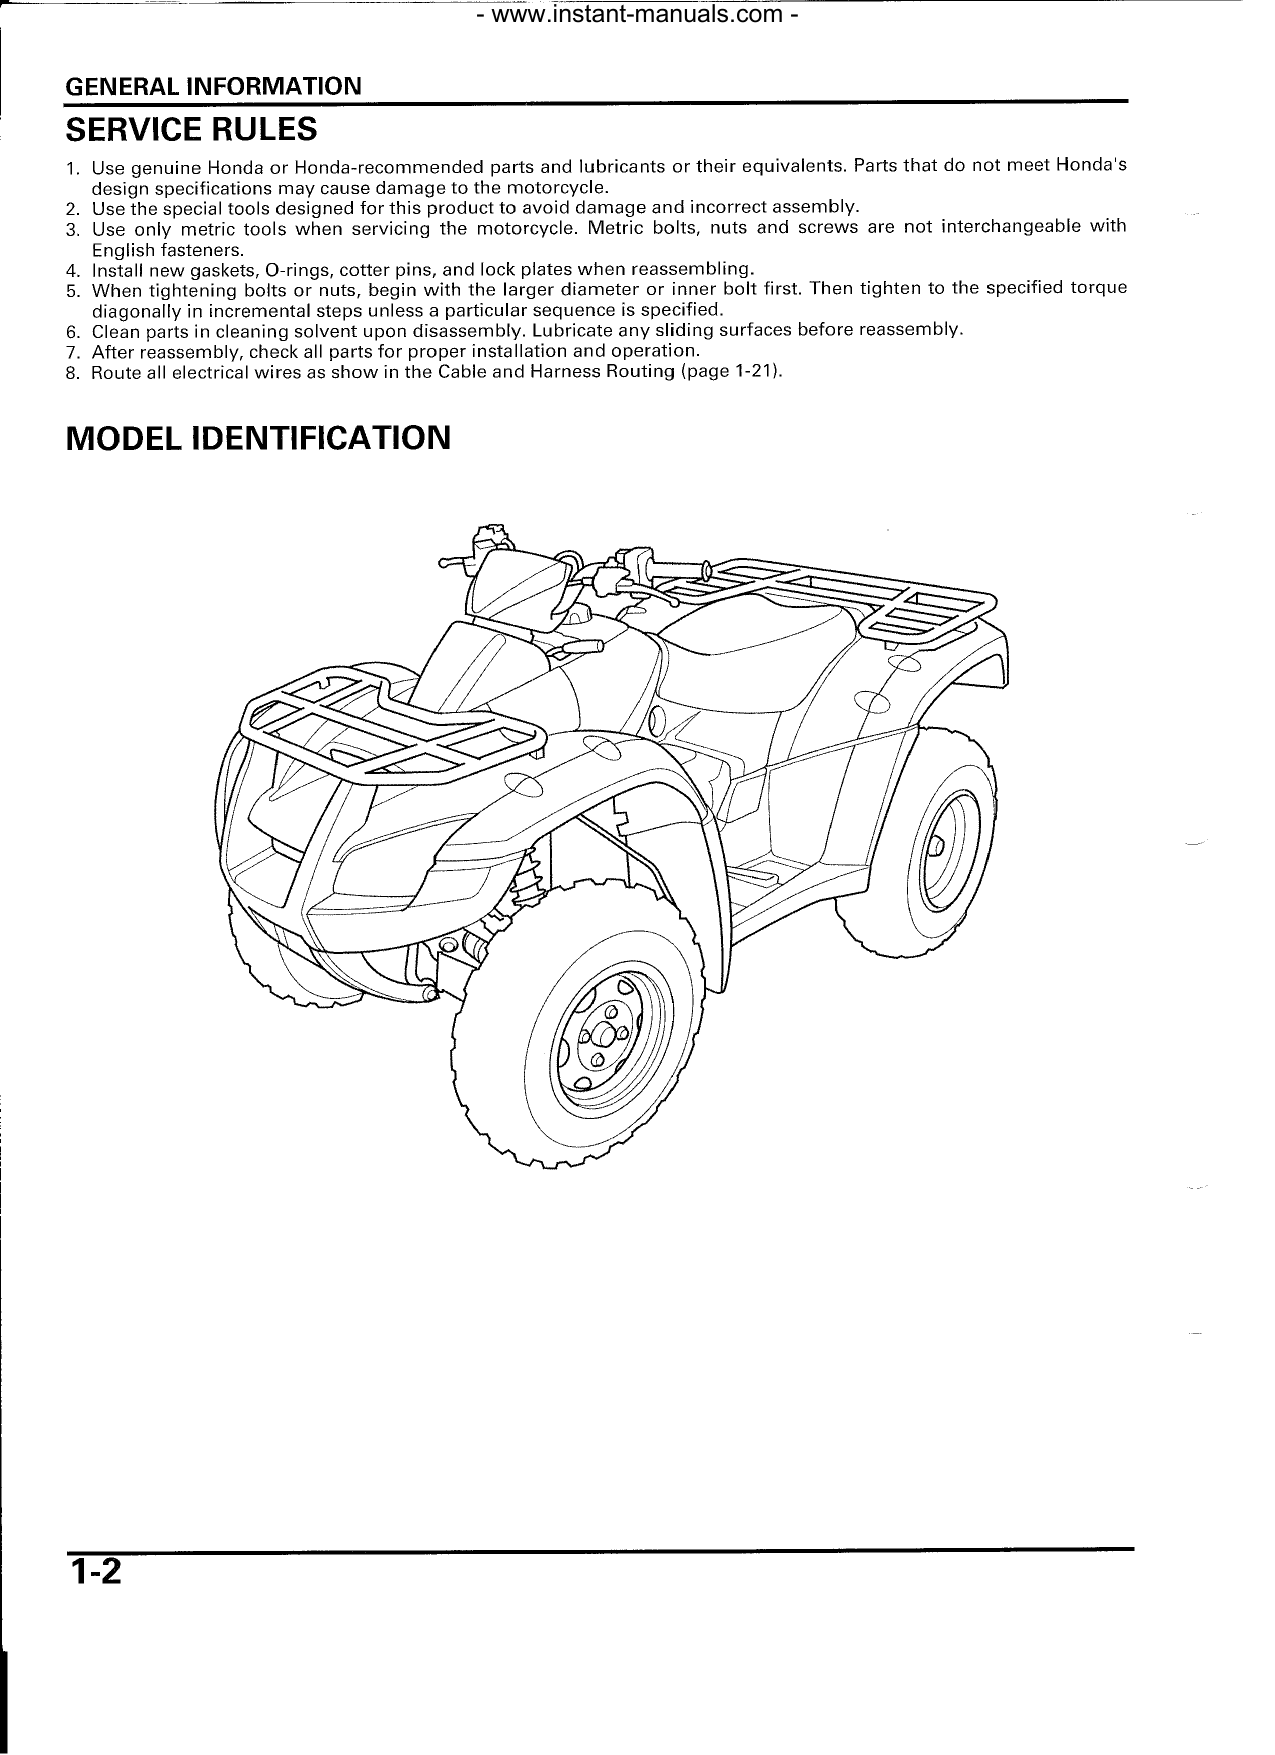 2003 Honda TRX650FA Rincon ATV service manual Preview image 4